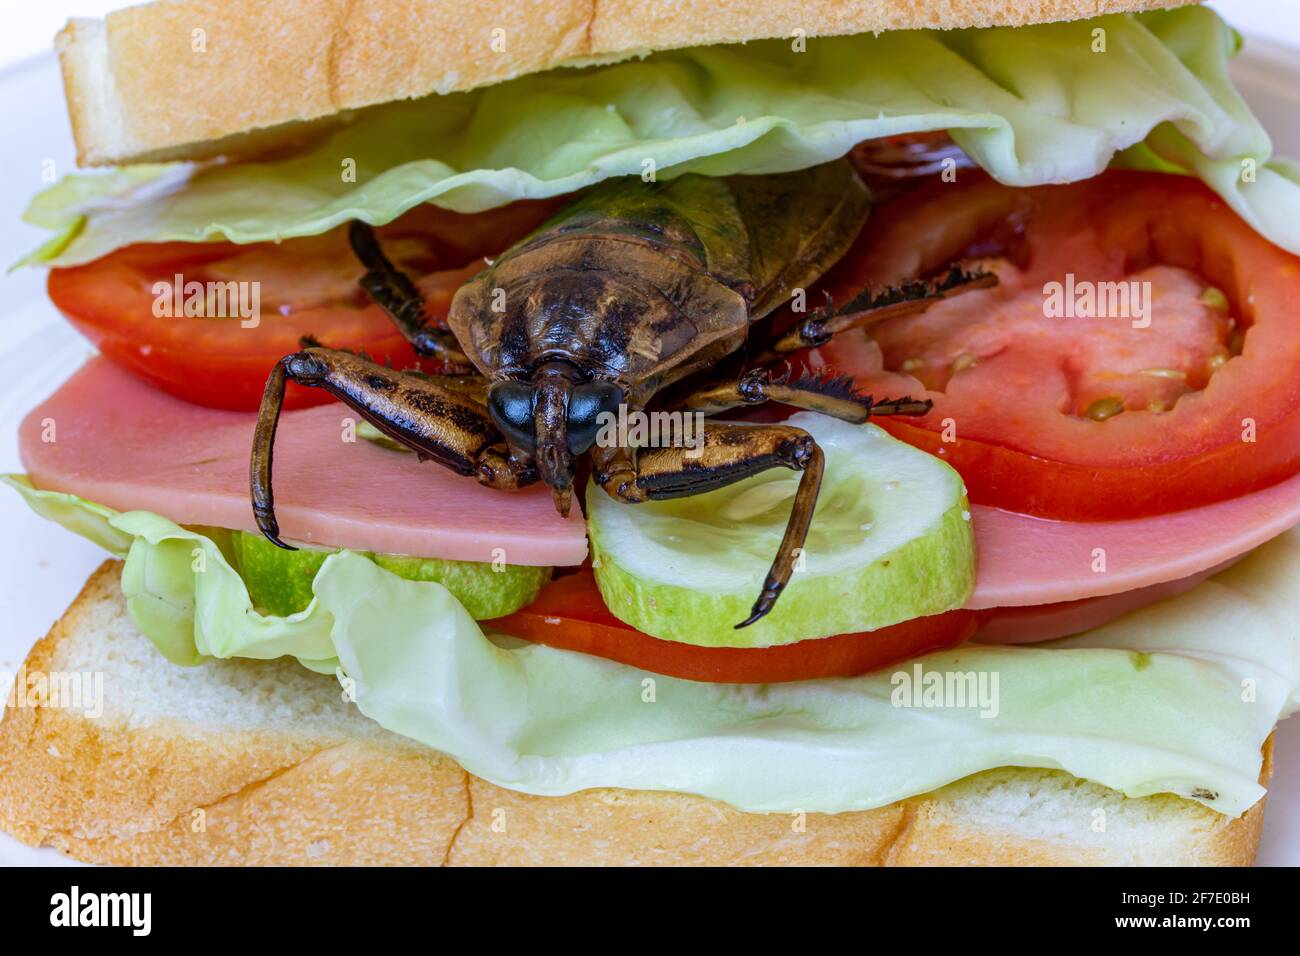 Cerrar sandwich con cucaracha fritos, verduras frescas y salami. Pan tostado con insectos comestibles. Foto de stock